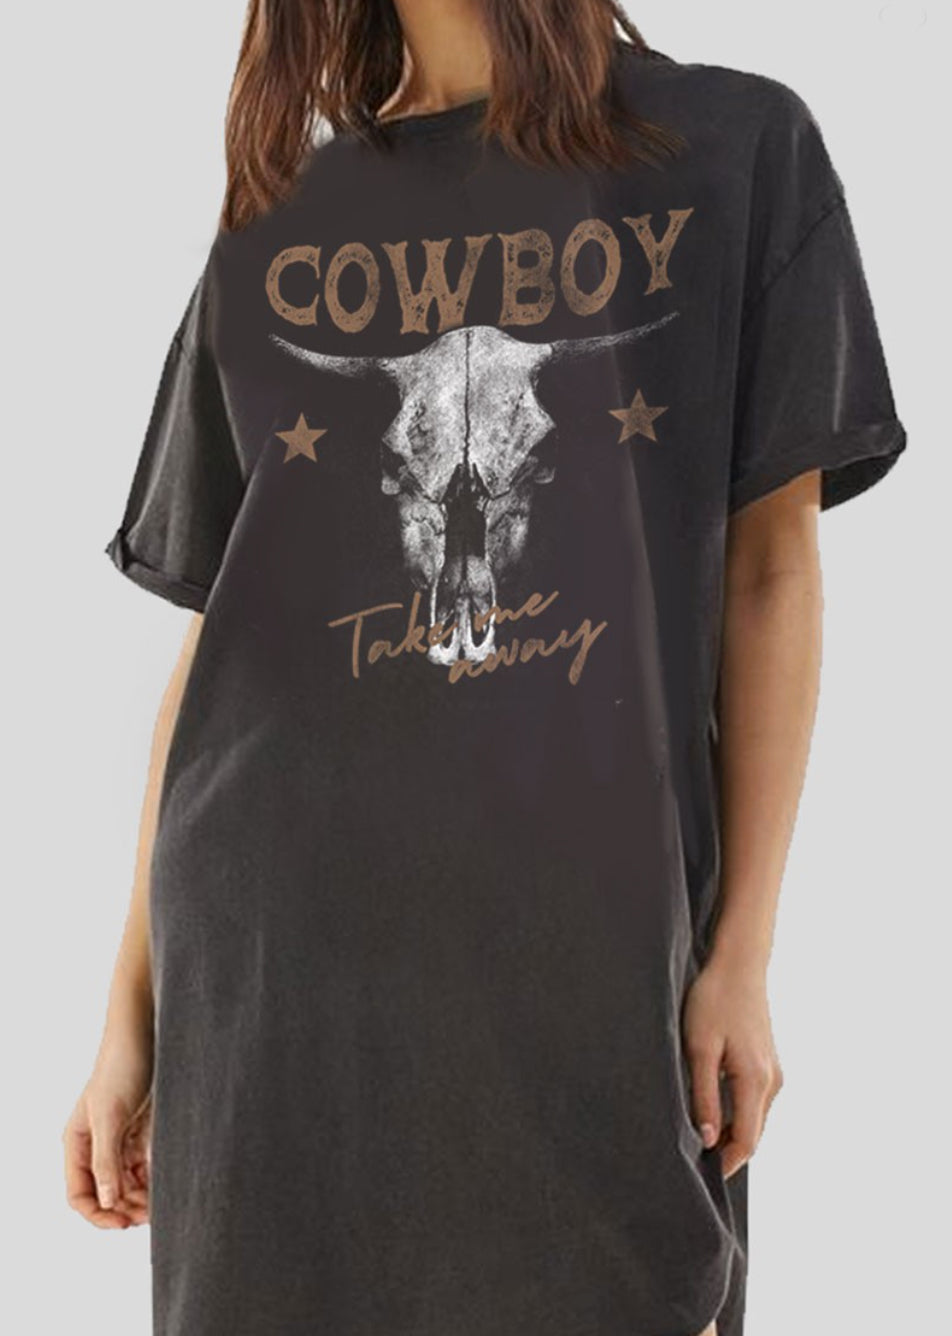 COWBOY TAKE ME AWAY TShirt Dress